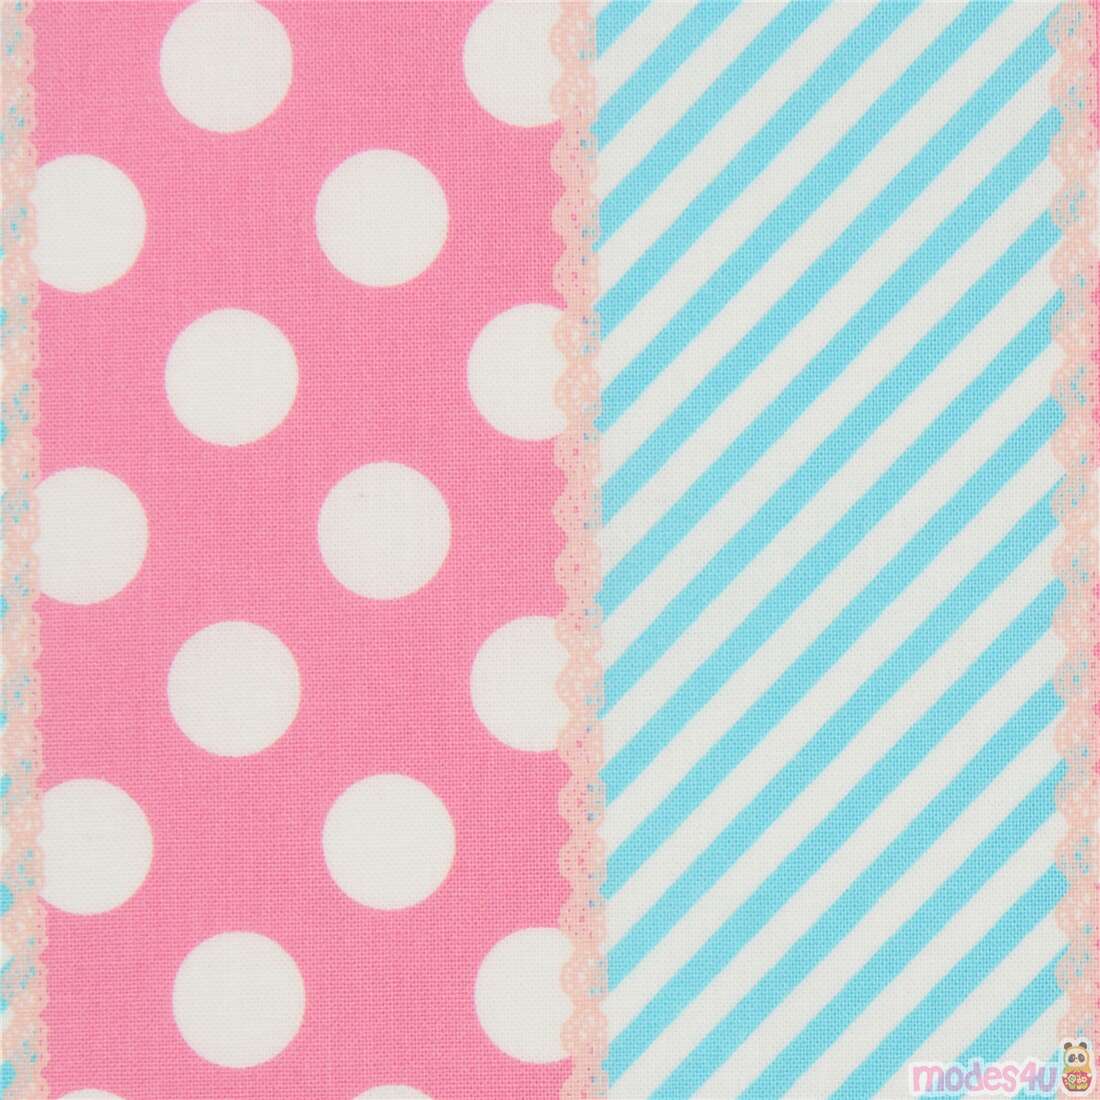 huis horizon barricade pink Kokka stripes and dots fabric from Japan - modeS4u